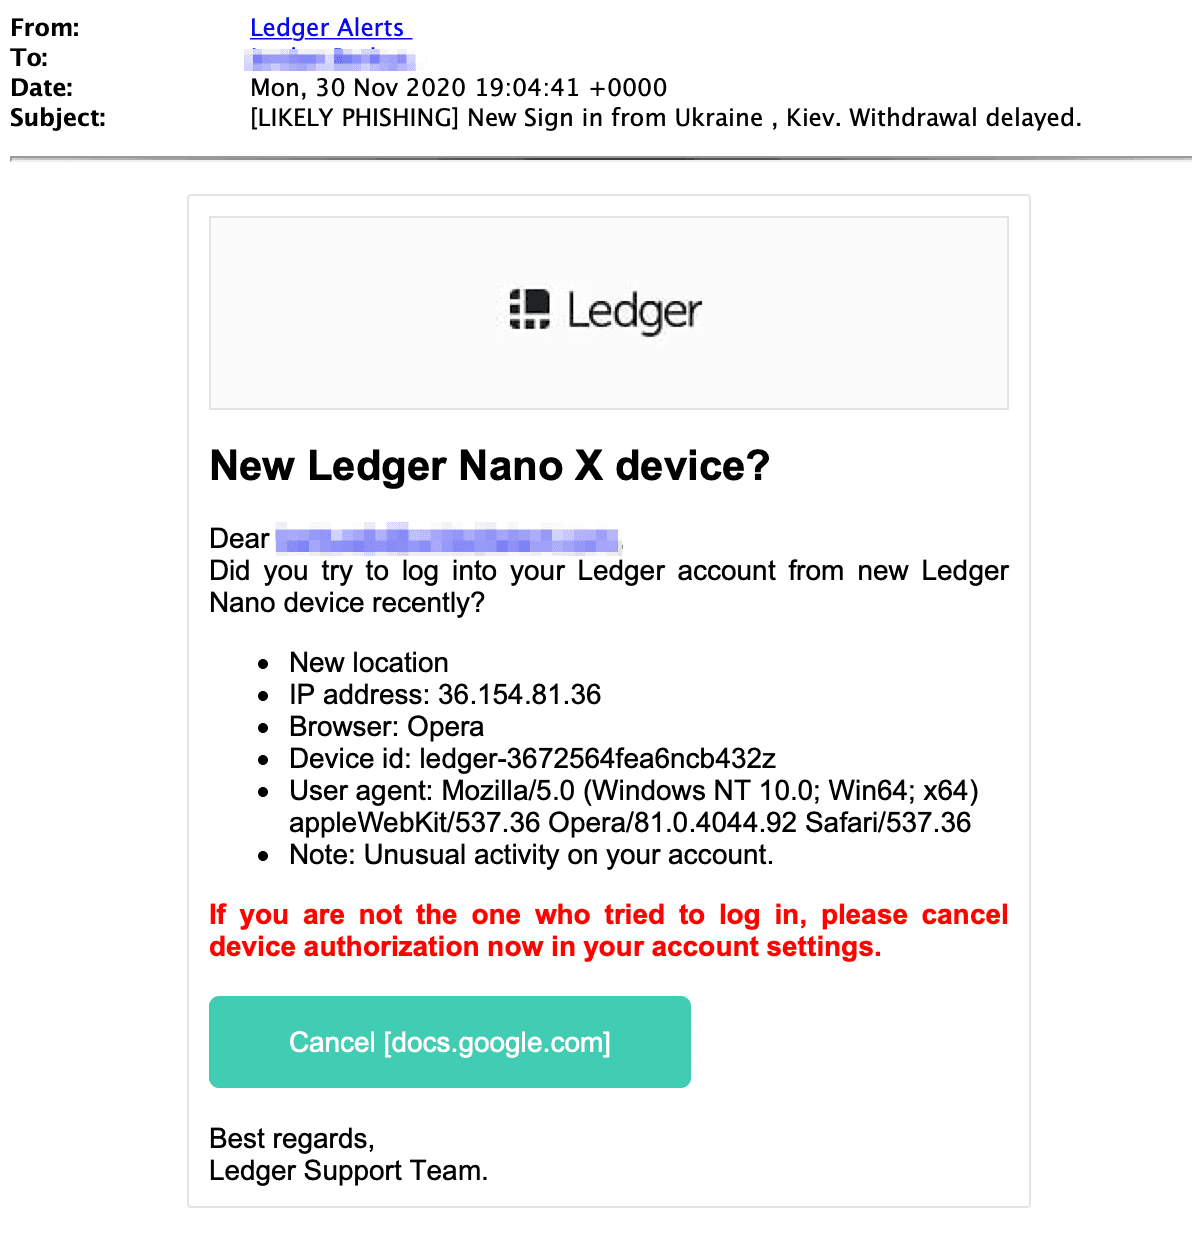 Phishing scam email impersonating Ledger